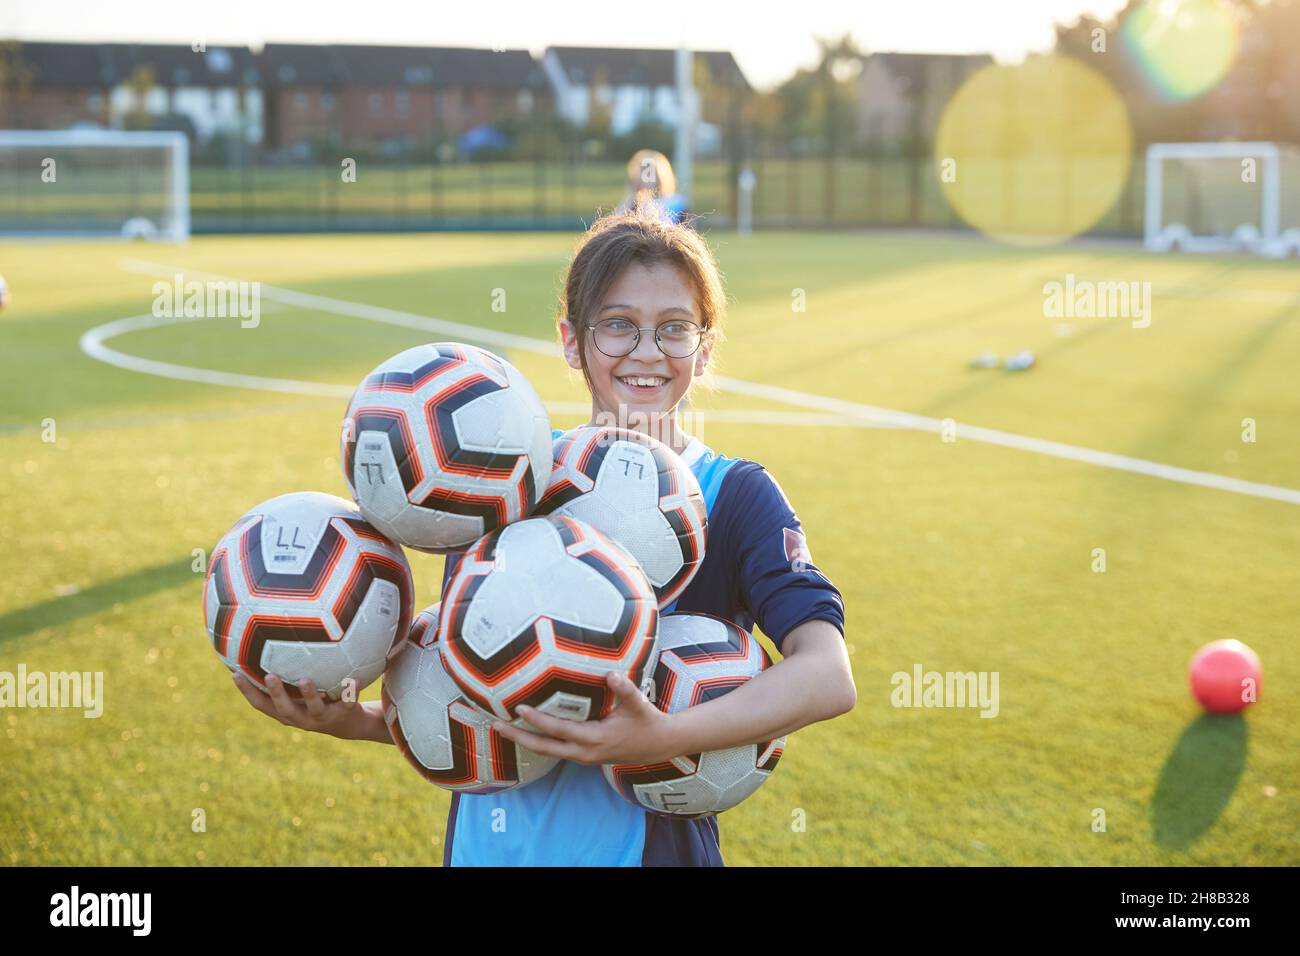 UK, Smiling female soccer player holding balls in field Stock Photo